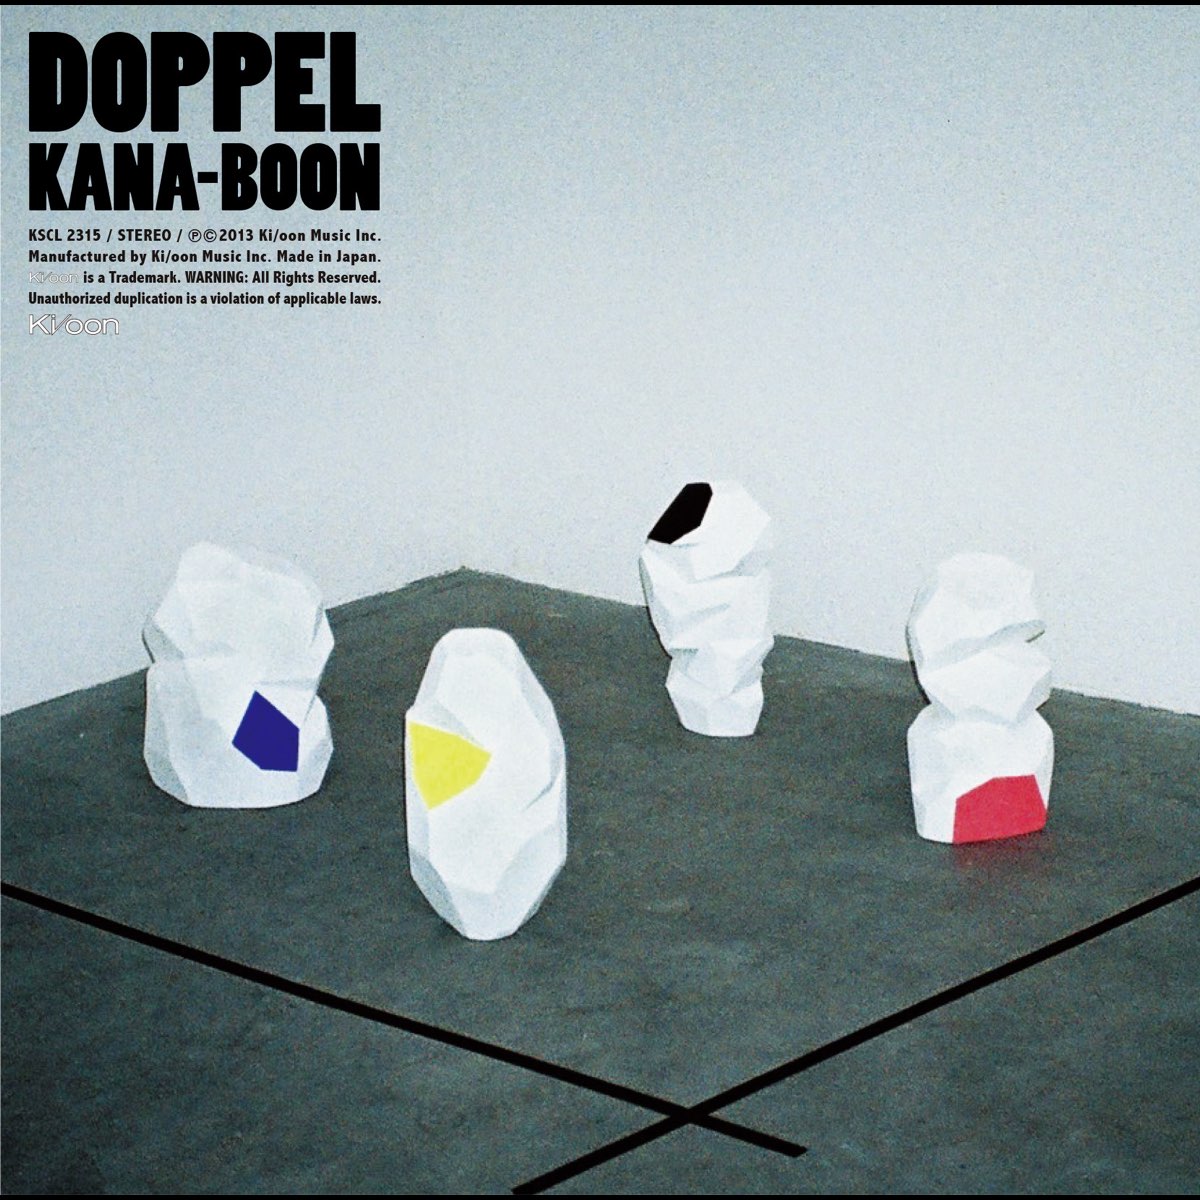 ‎KANA-BOONの「DOPPEL」をApple Musicで